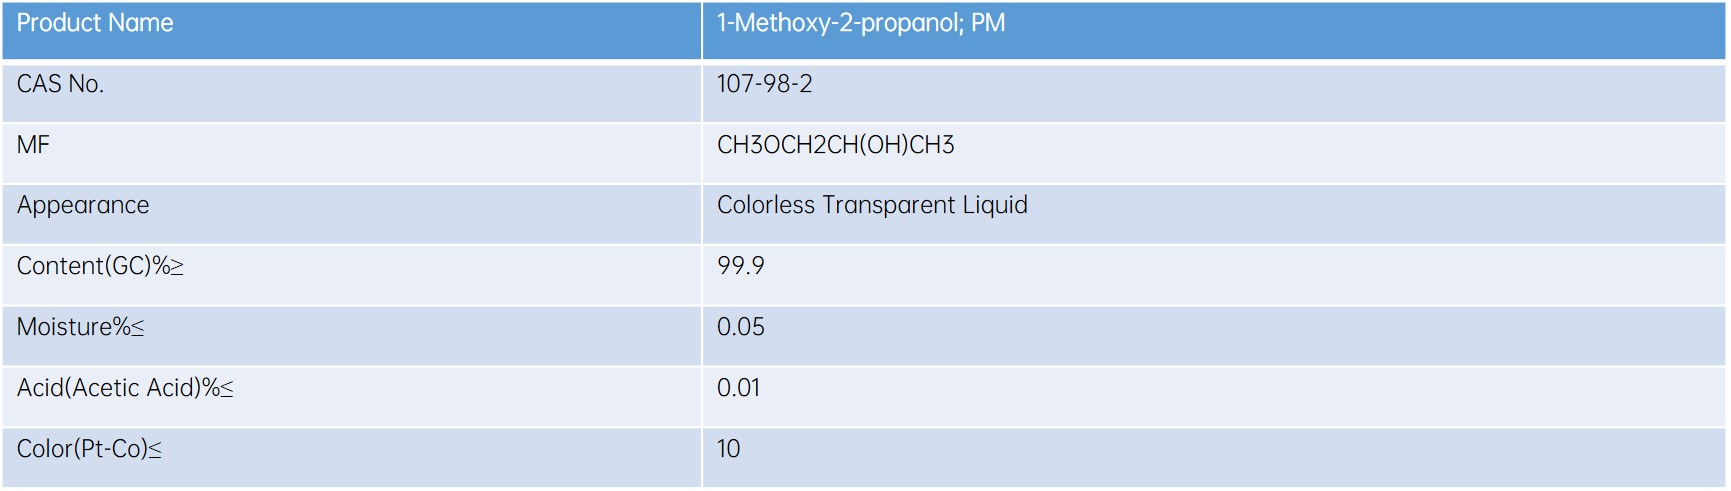 1-Methoxy-2-propanol (PM)